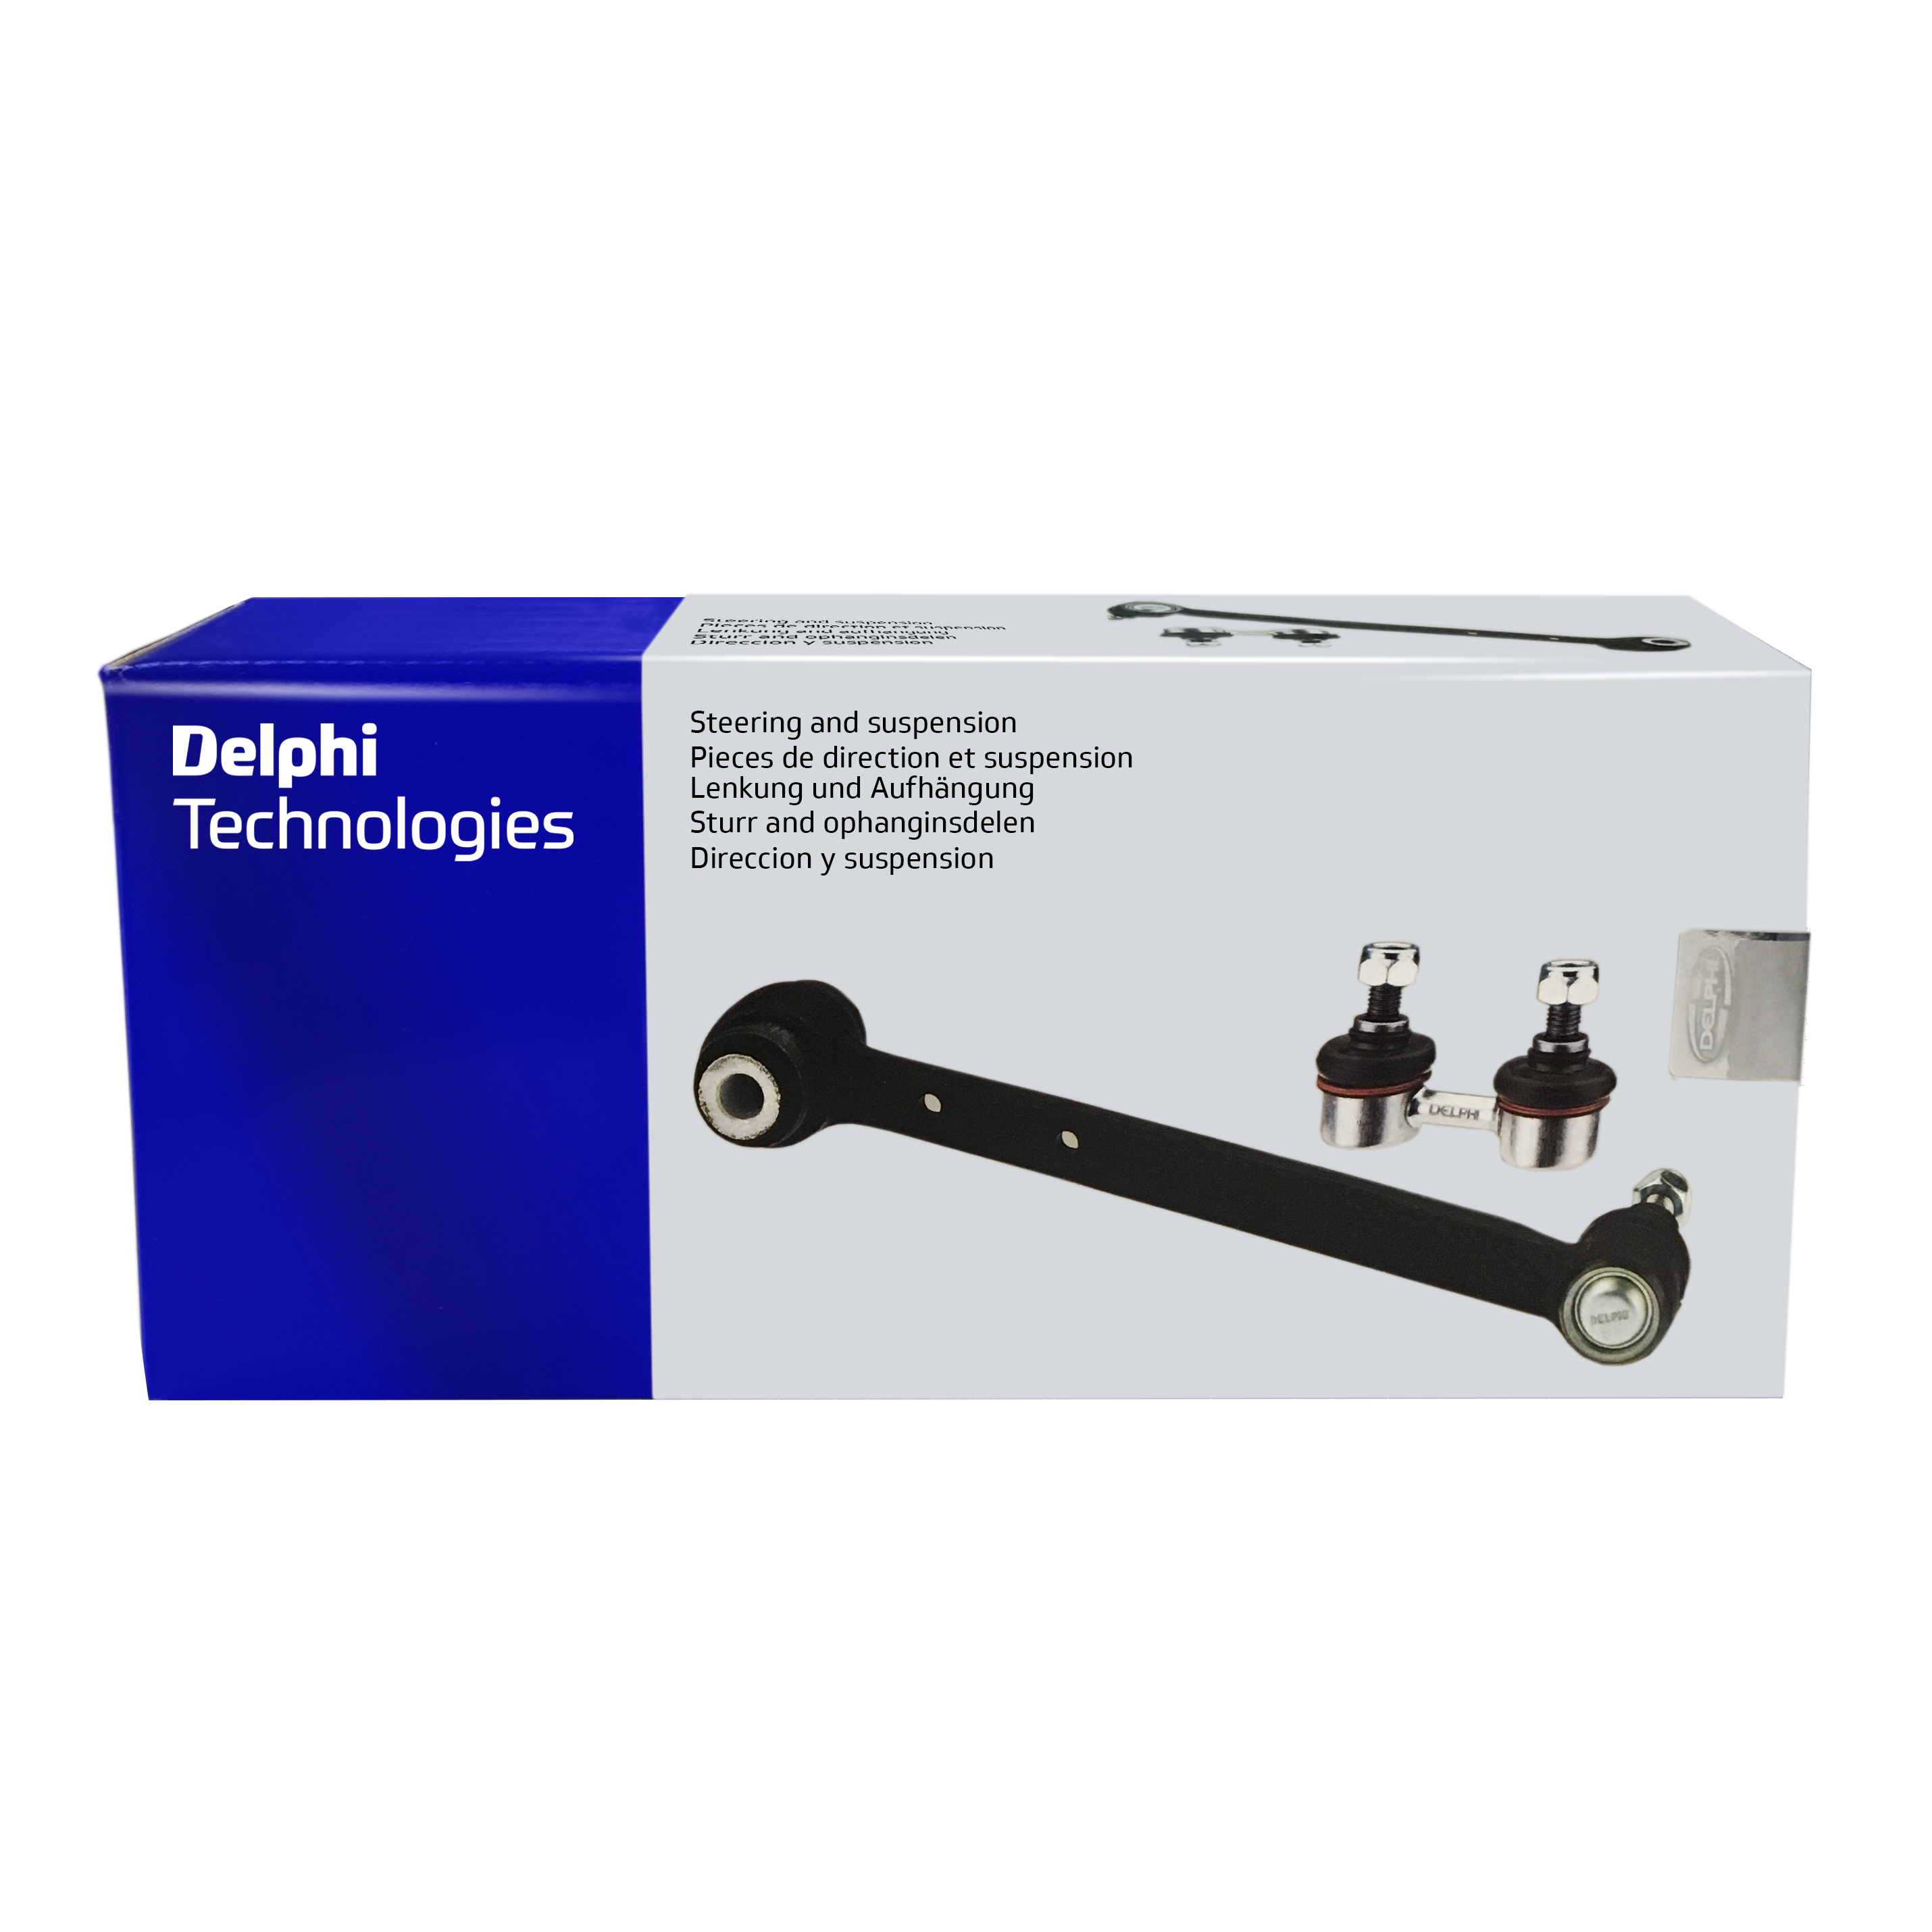 Delphi Technologies packaging -  retail box